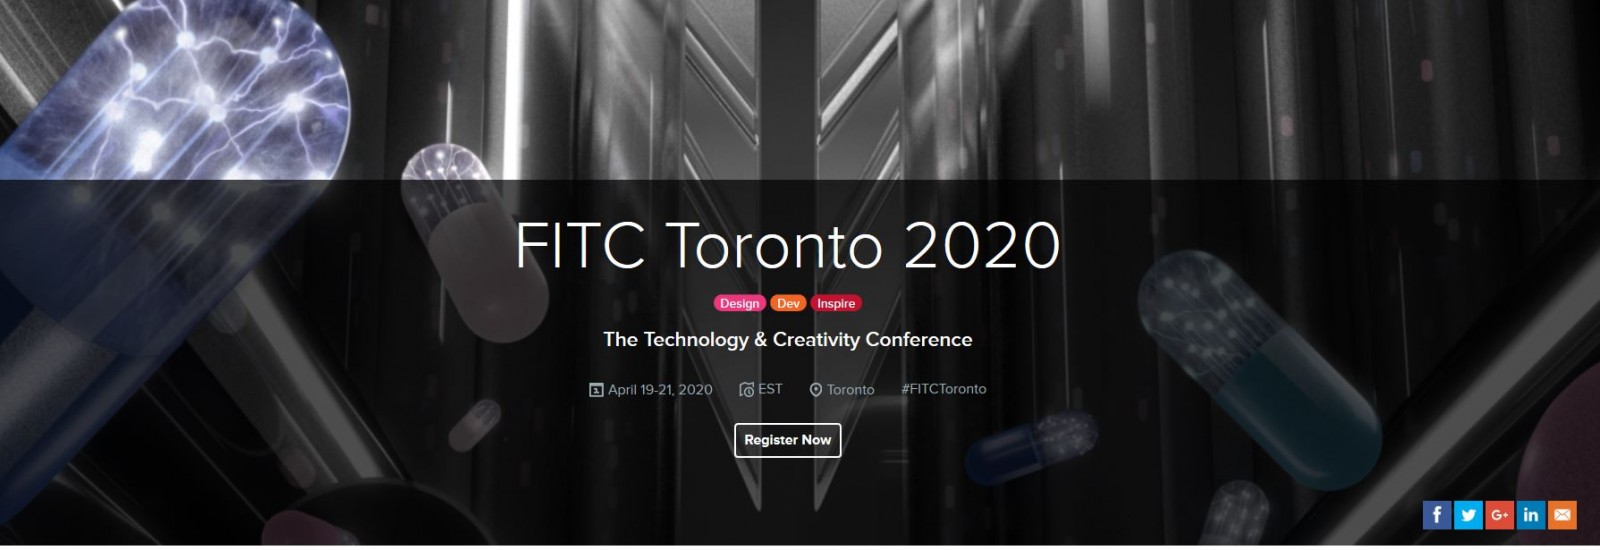 FITC Toronto 2020